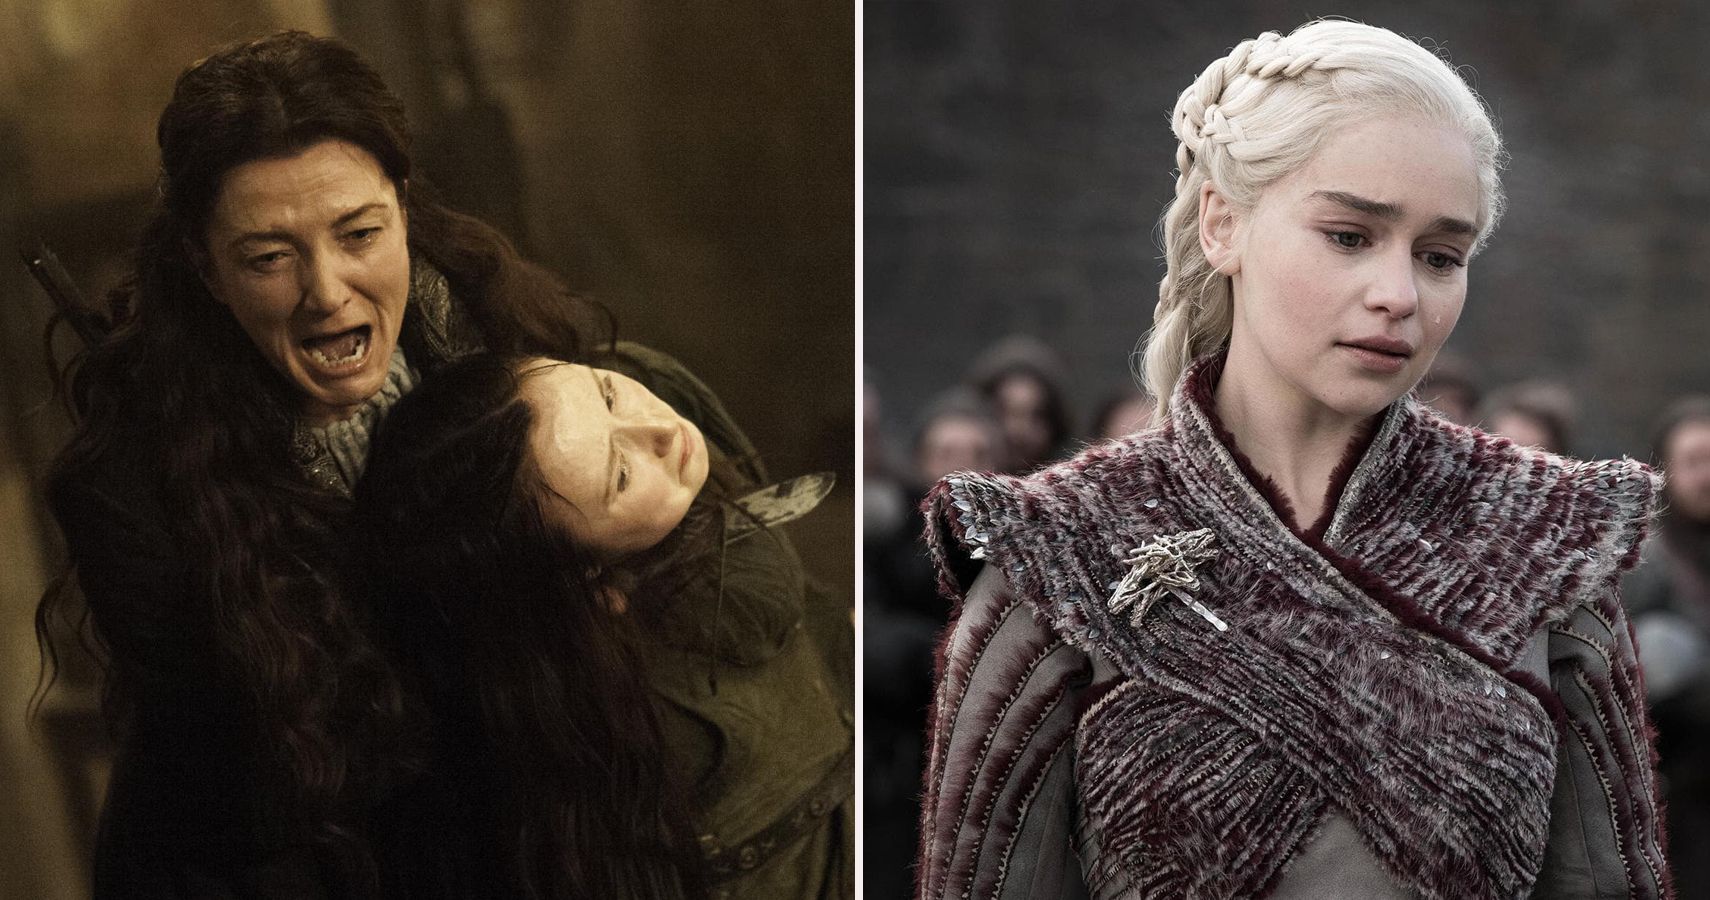 5 Best Worst Episodes Of Game Of Thrones According To Imdb